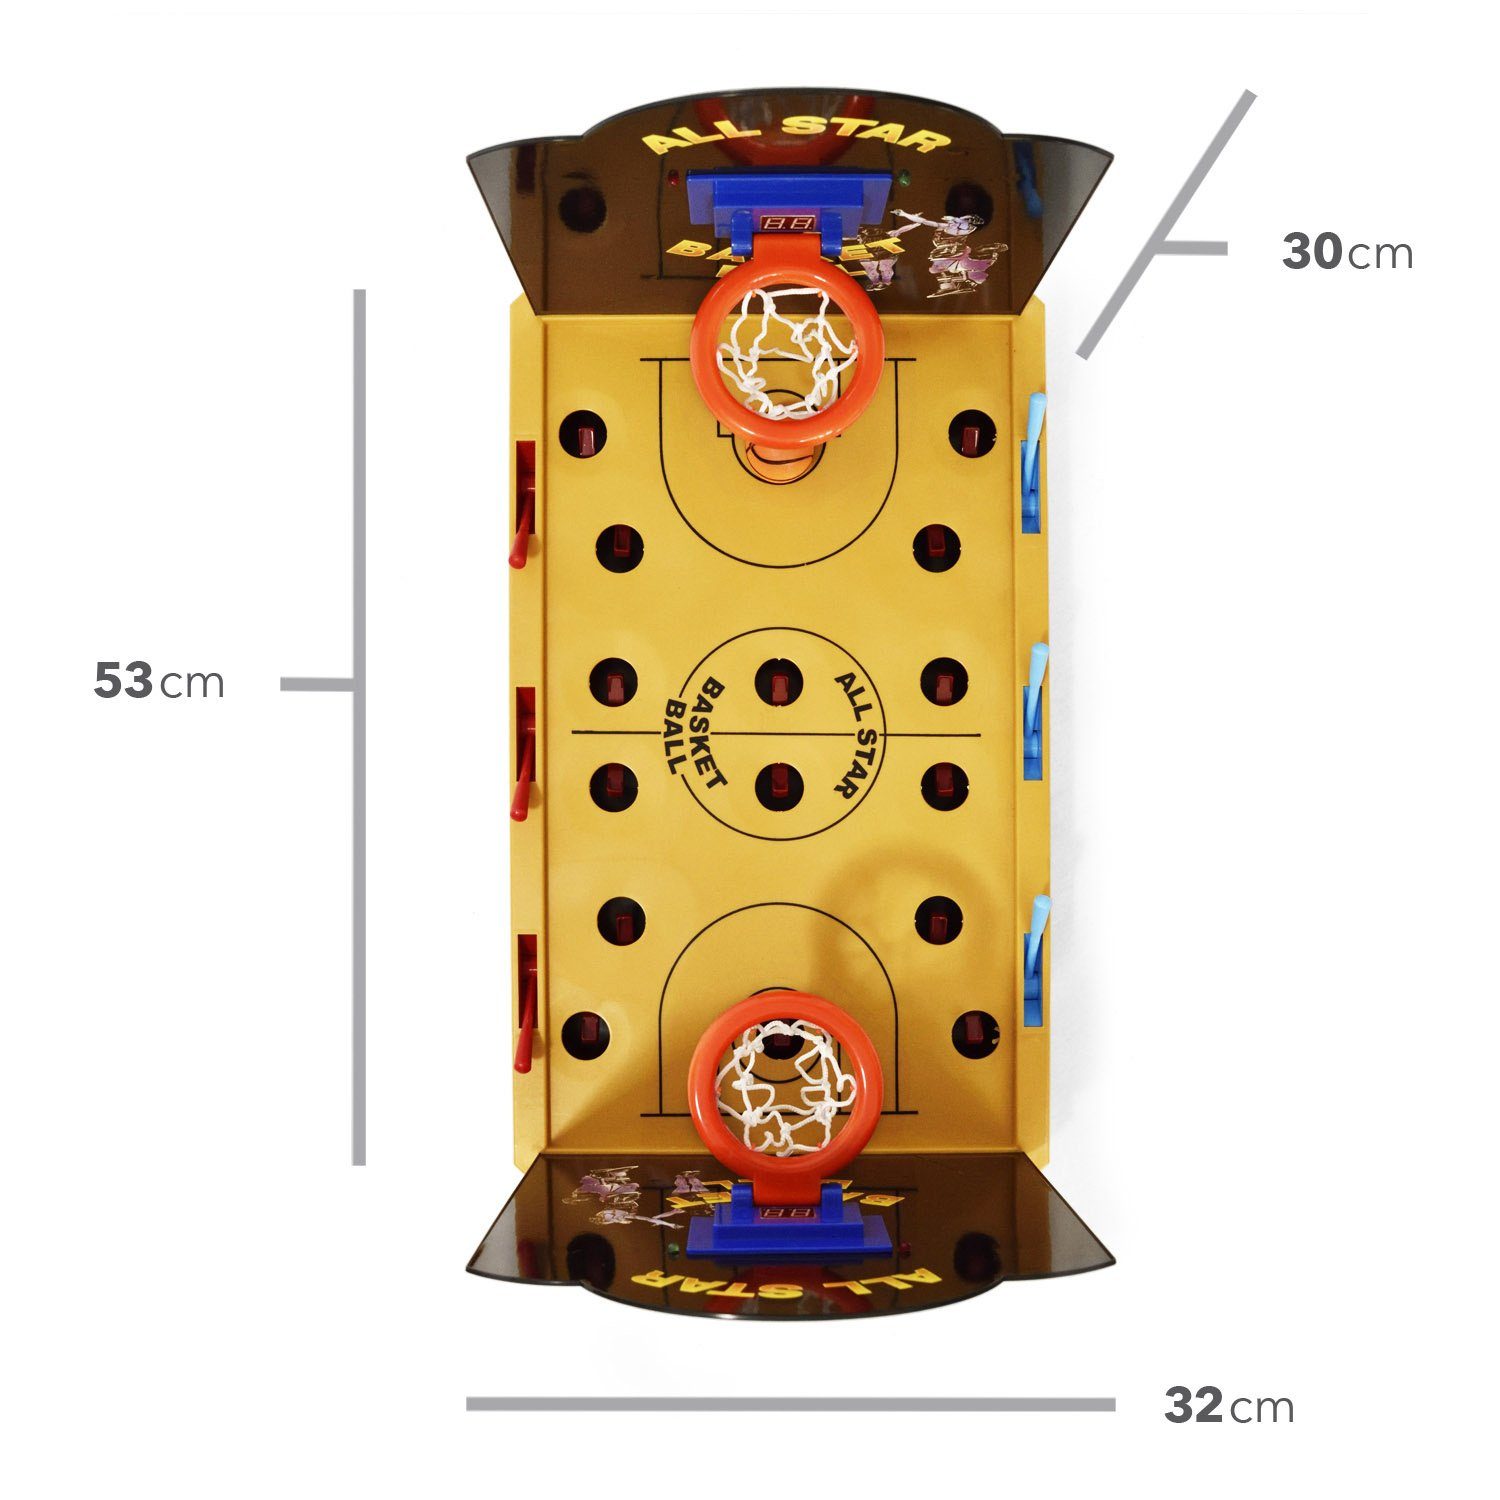 Goodsngadgets Spiel-Süßigkeiten-Greifautomat mit USB ab 39,99